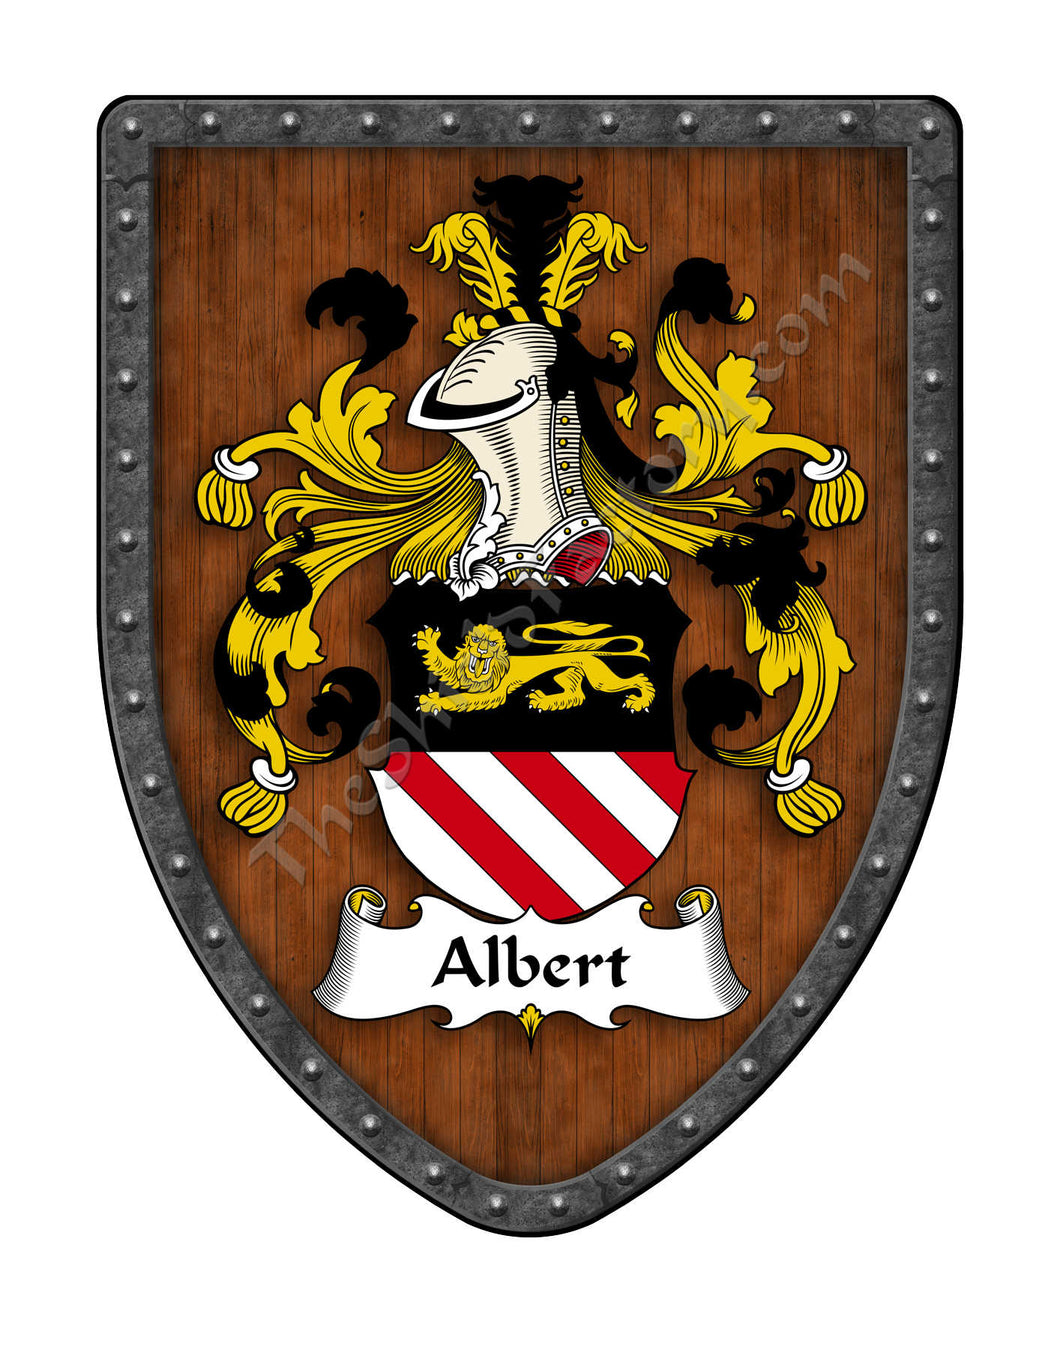 Albert - German Coat of Arms Family Crest